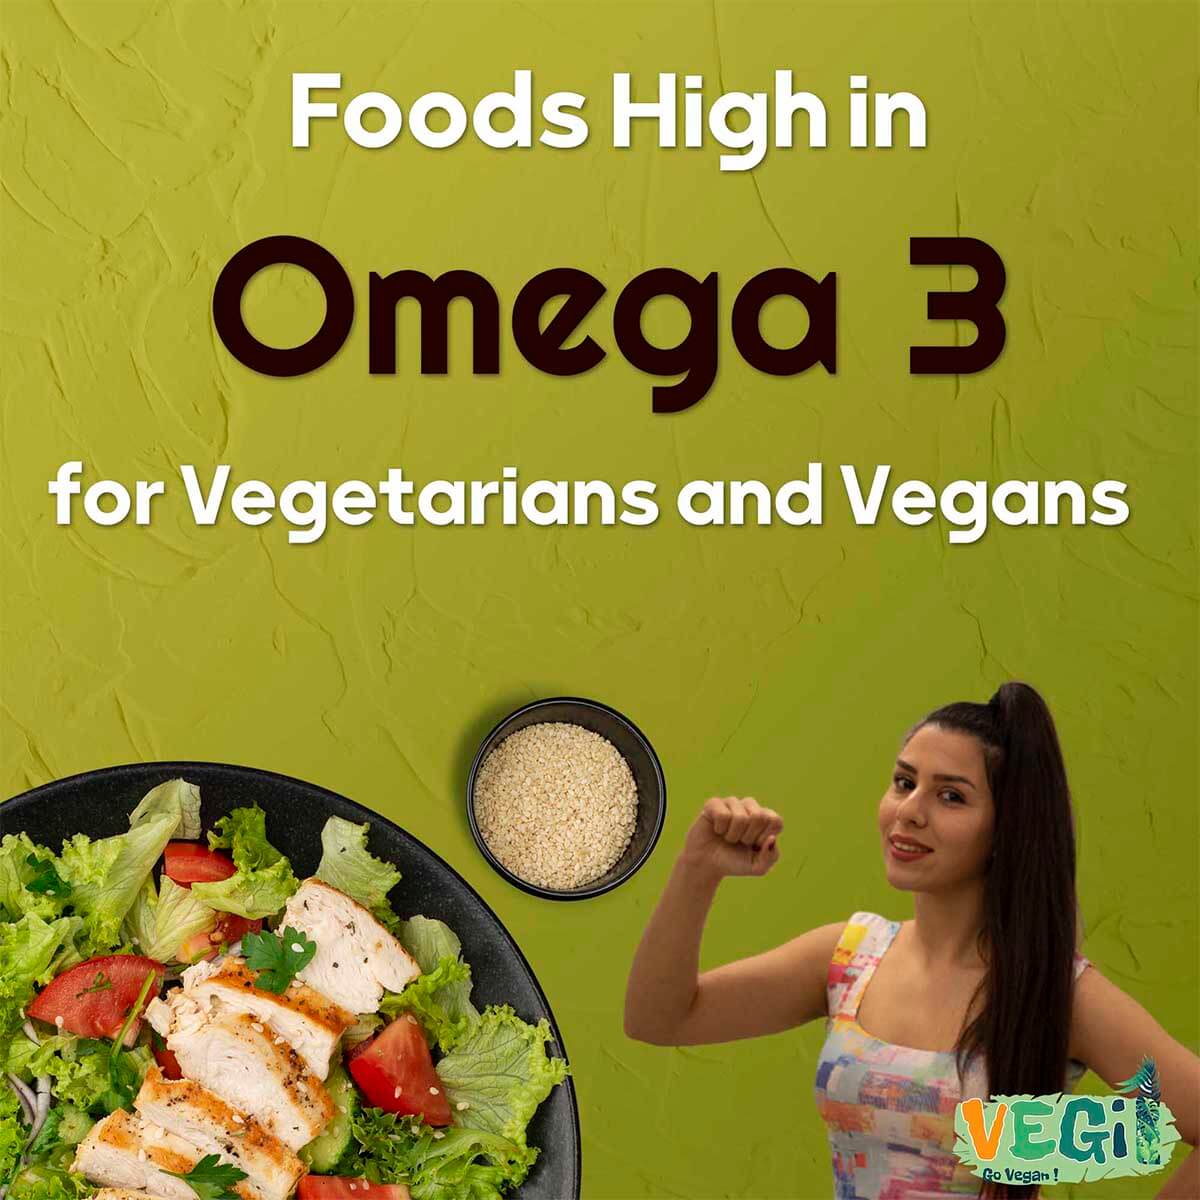 Foods High in Omega 3 for Vegetarians and Vegans